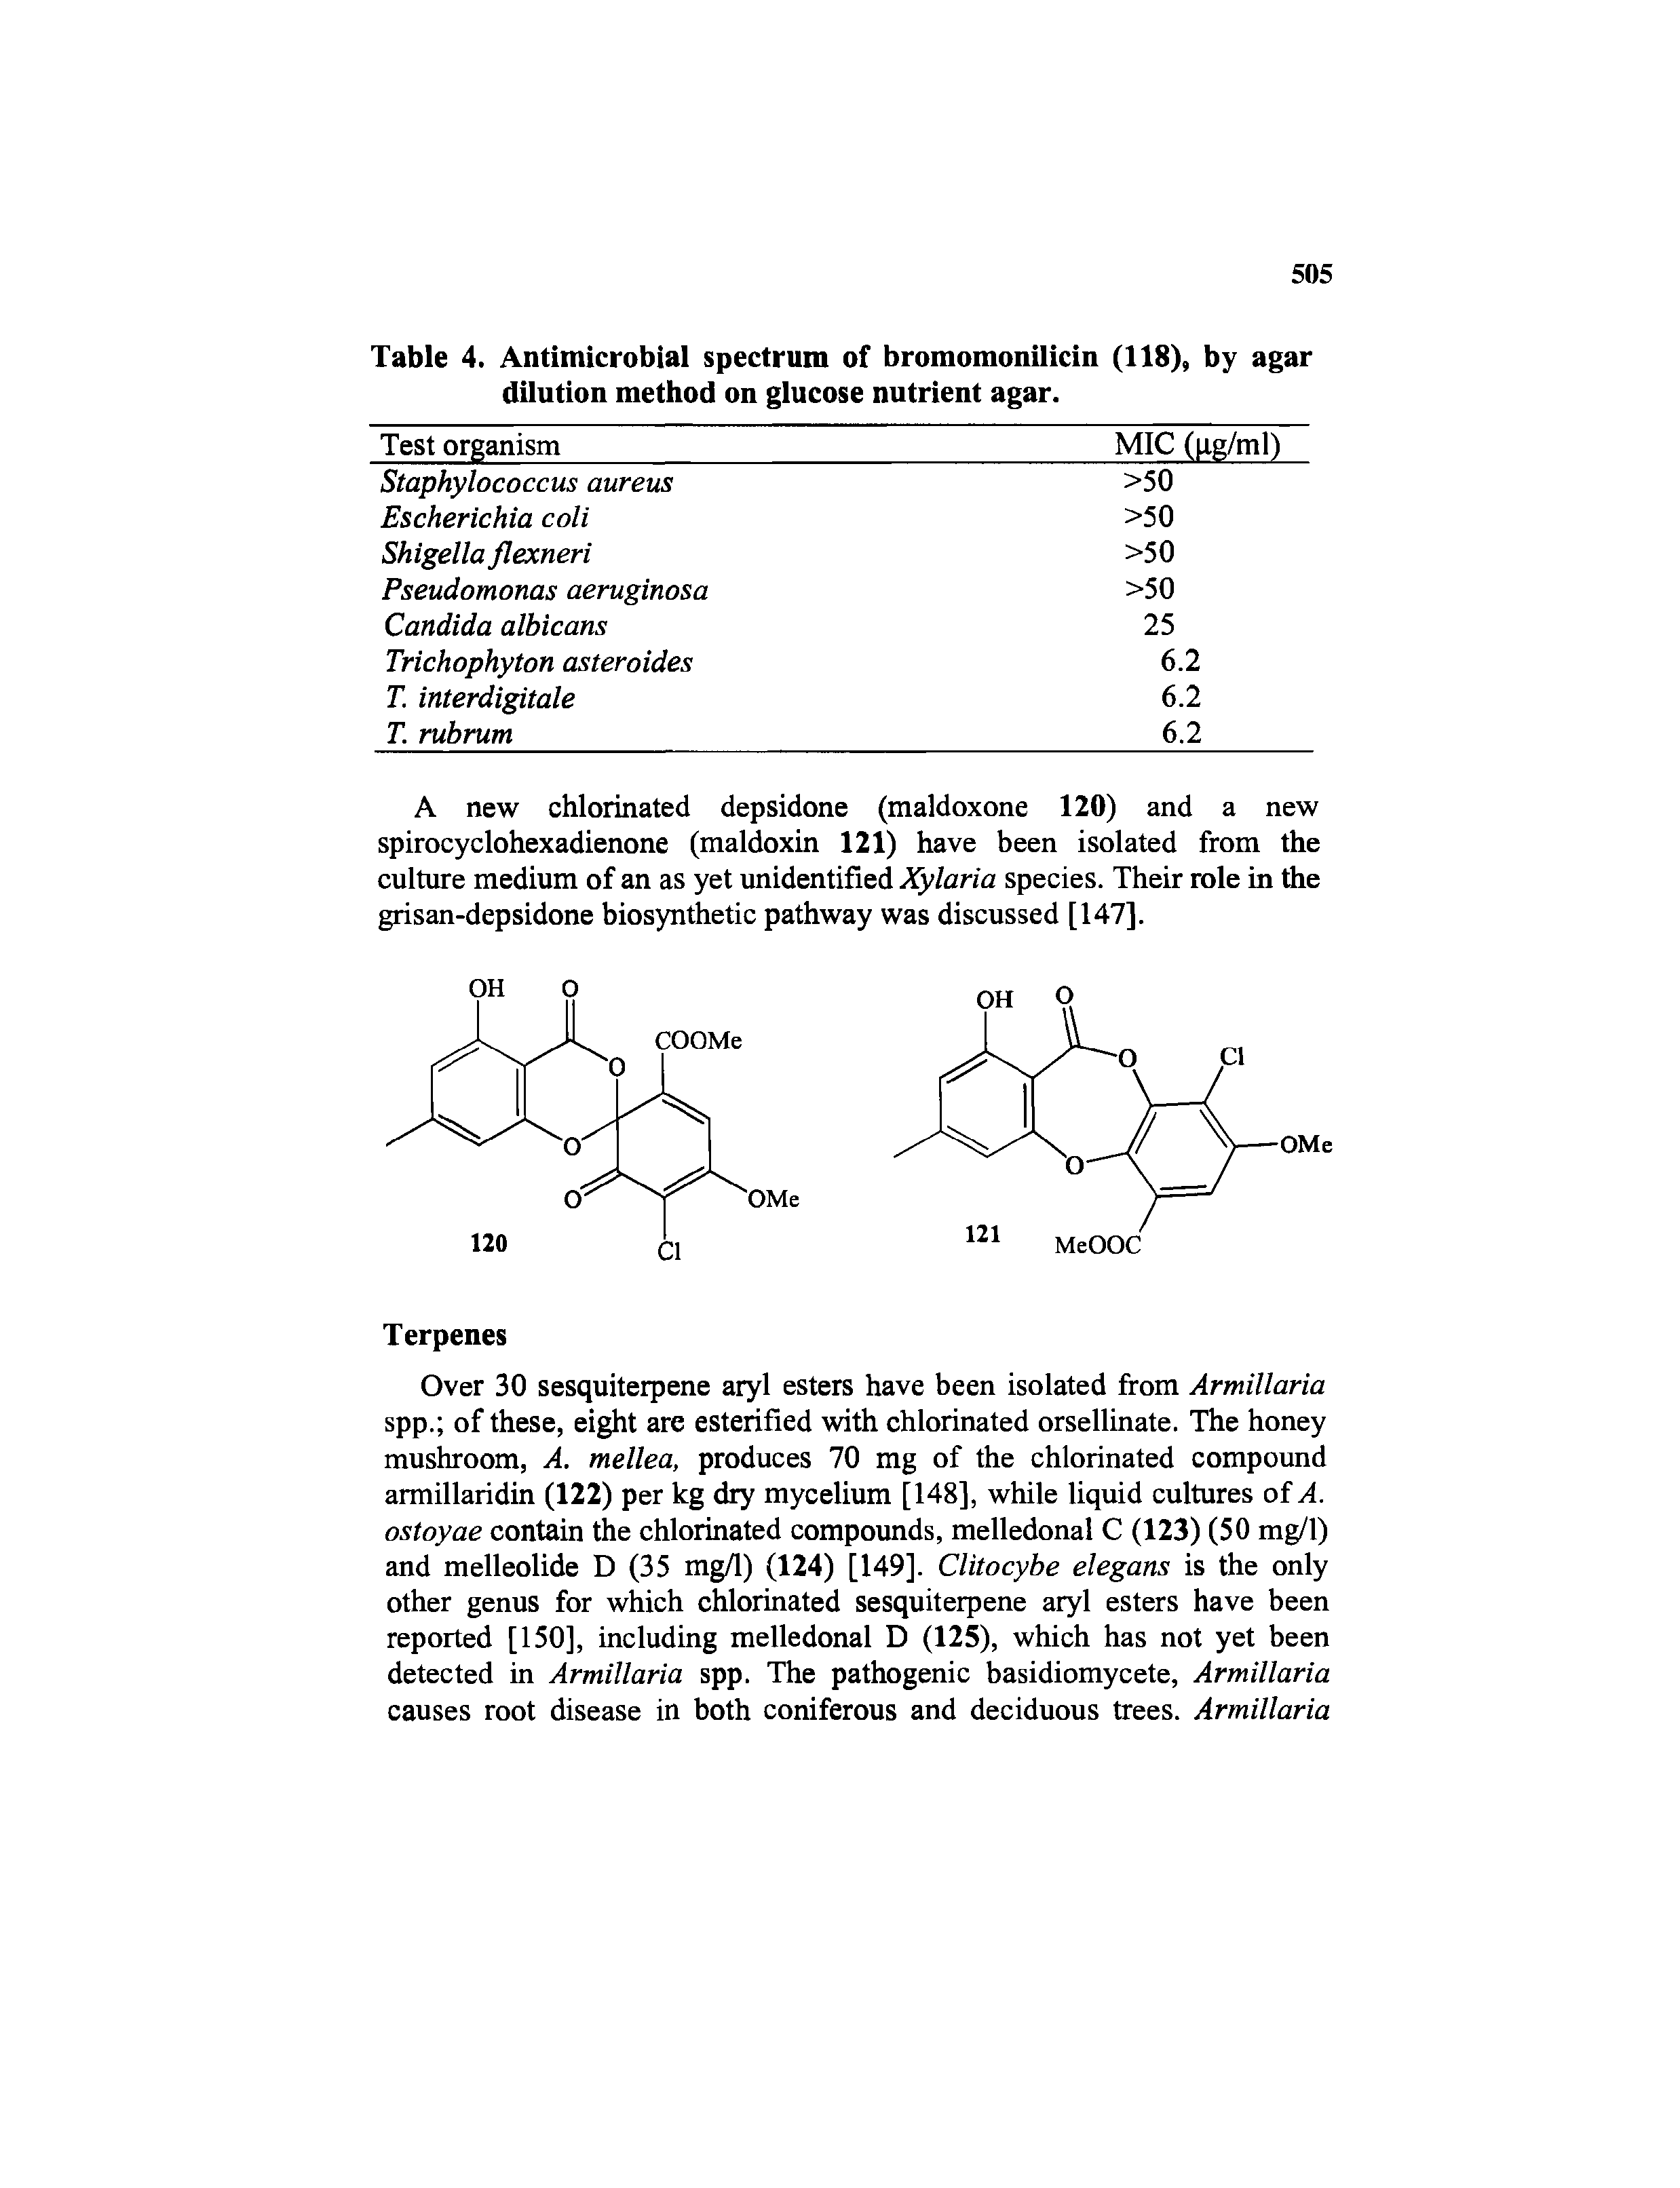 Table 4. Antimicrobial spectrum of bromomonilicin (118), by agar dilution method on glucose nutrient agar.